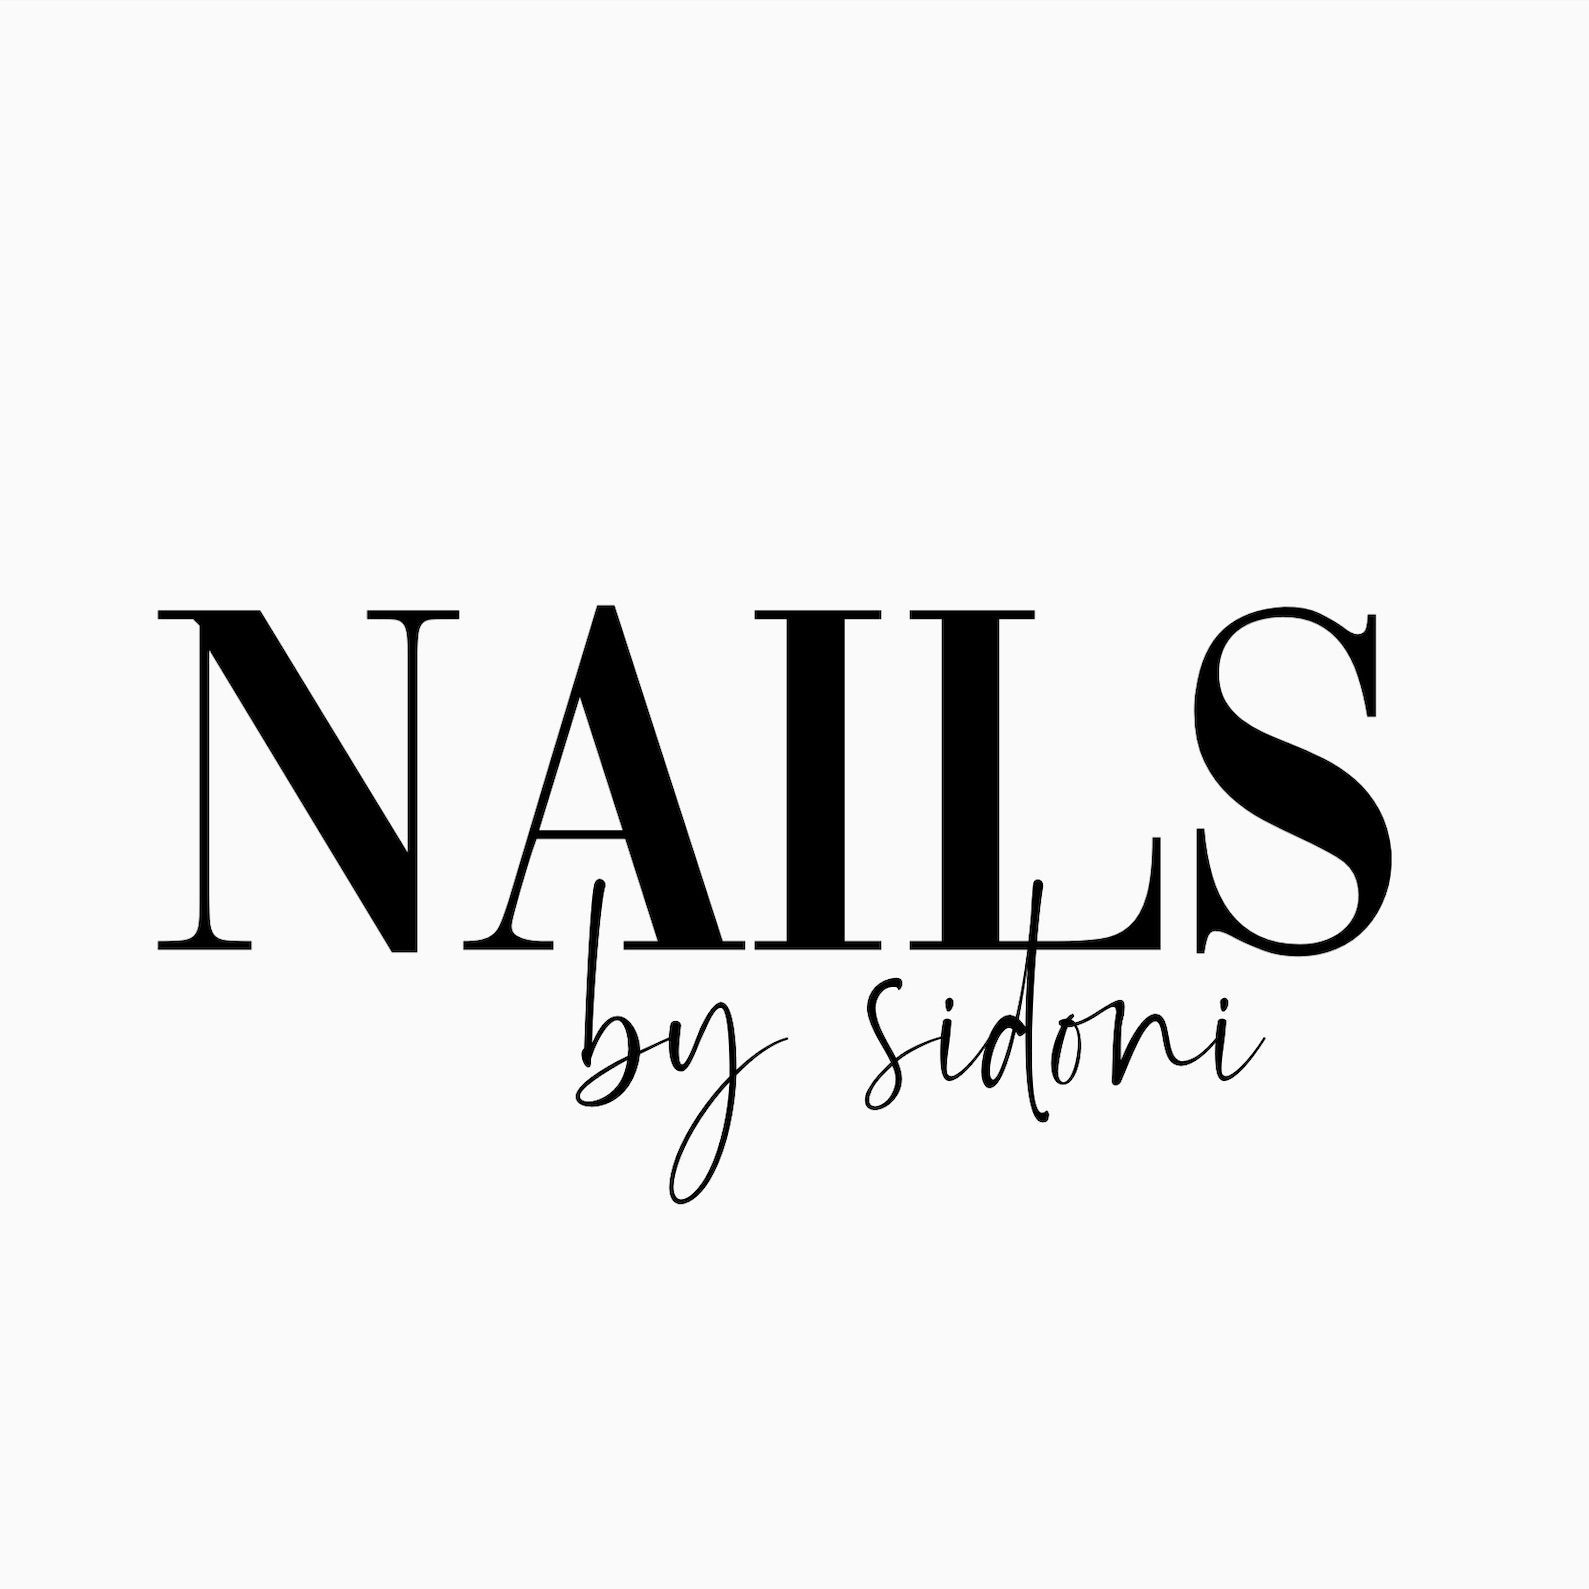 Nailsby_sidoni, Nails by sidoni, Tudor lane, LD1 5UL, Llandrindod Wells